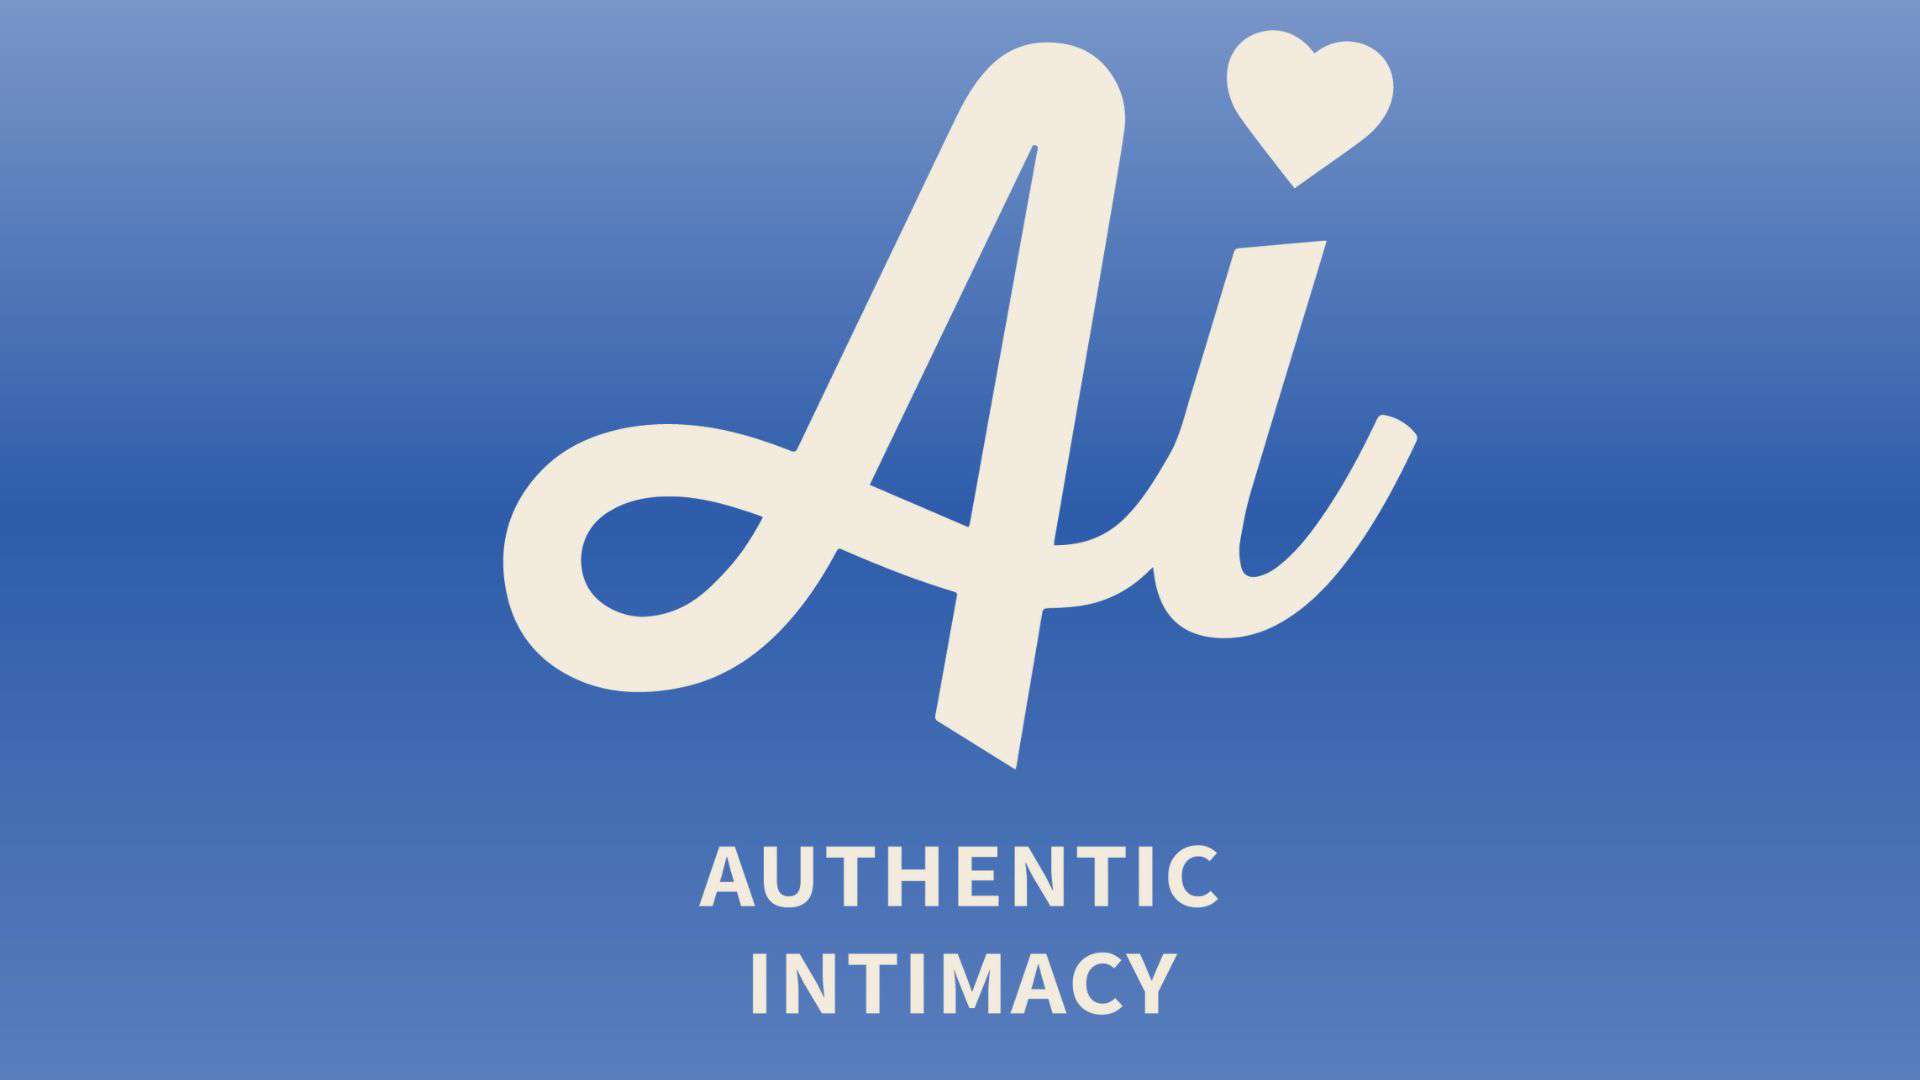 Authentic Intimacy Core Values